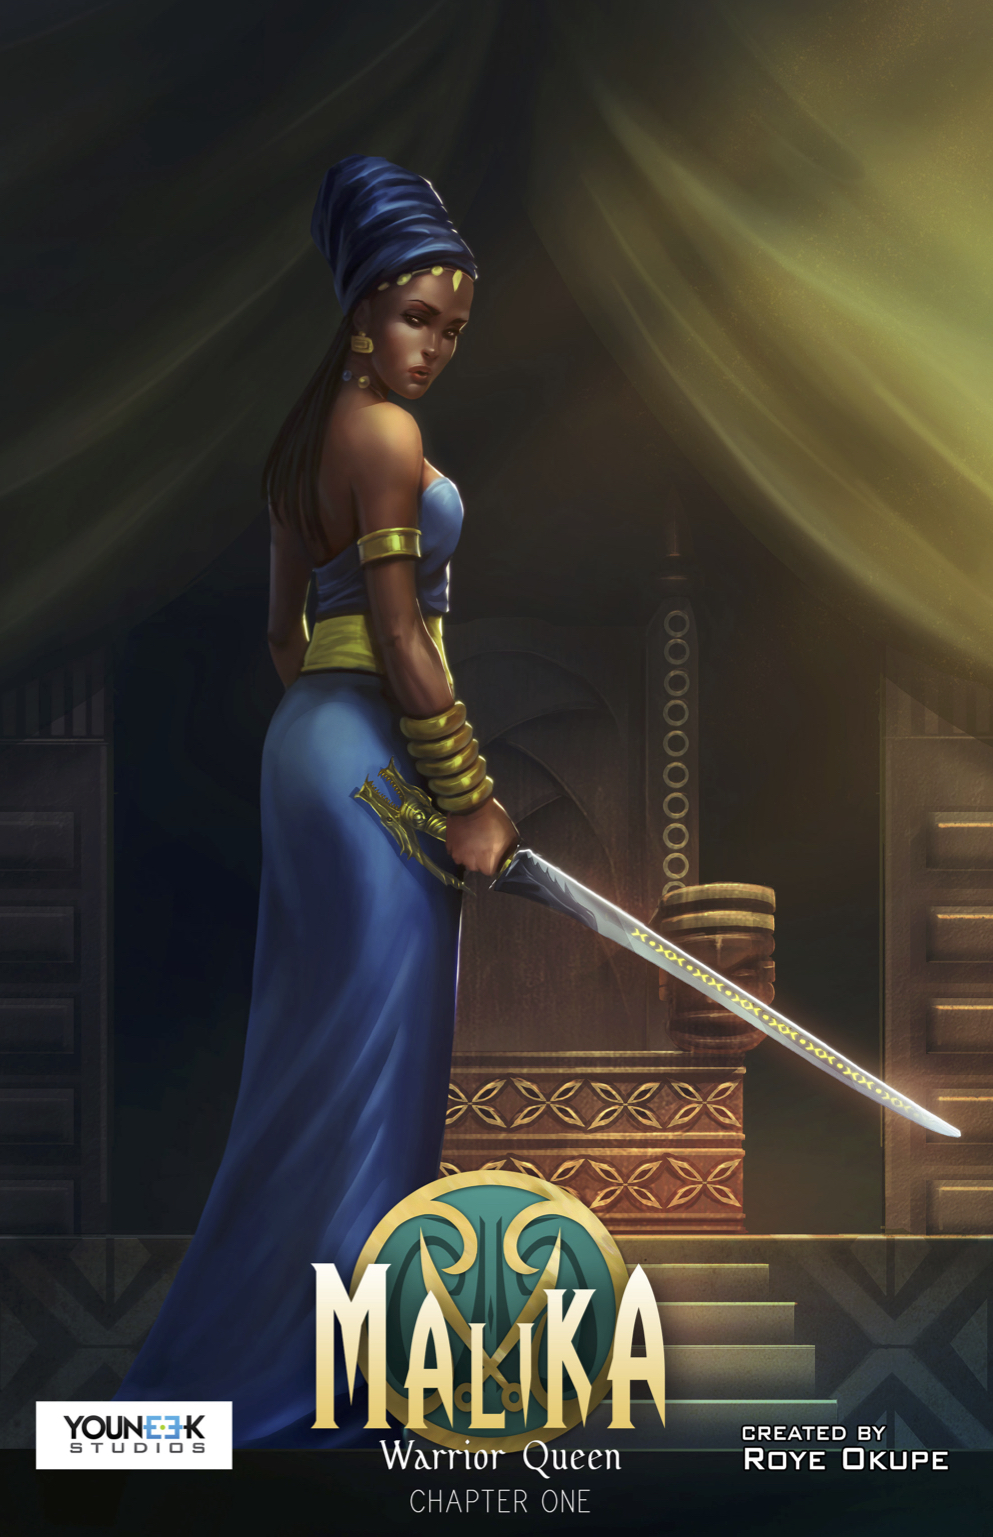 Malika Warrior Queen